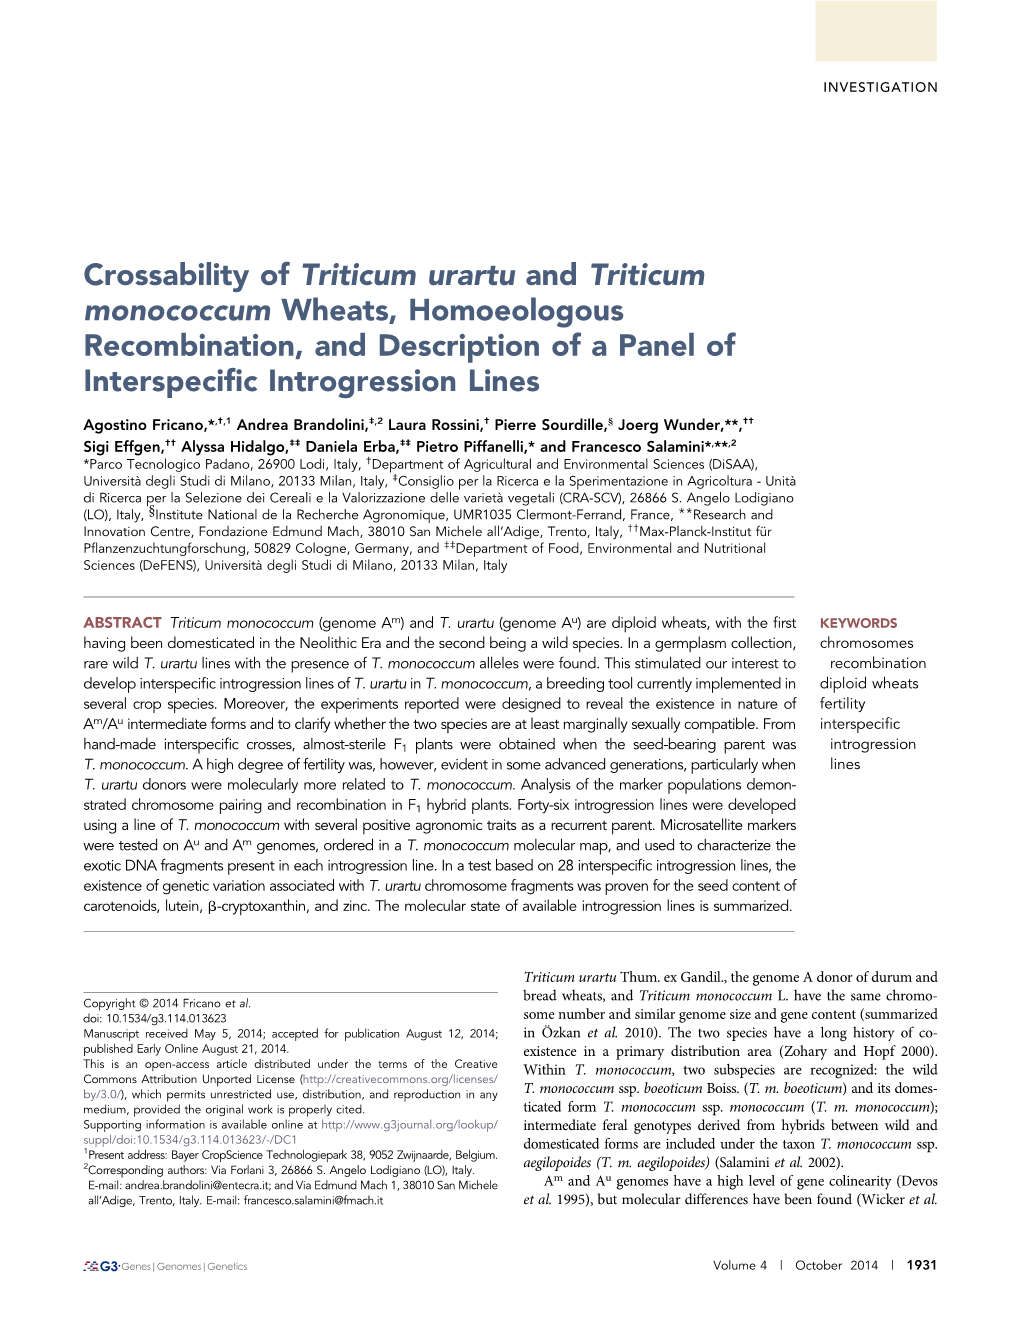 Crossability of Triticum Urartu and Triticum Monococcum Wheats, Homoeologous Recombination, and Description of a Panel of Interspeciﬁc Introgression Lines